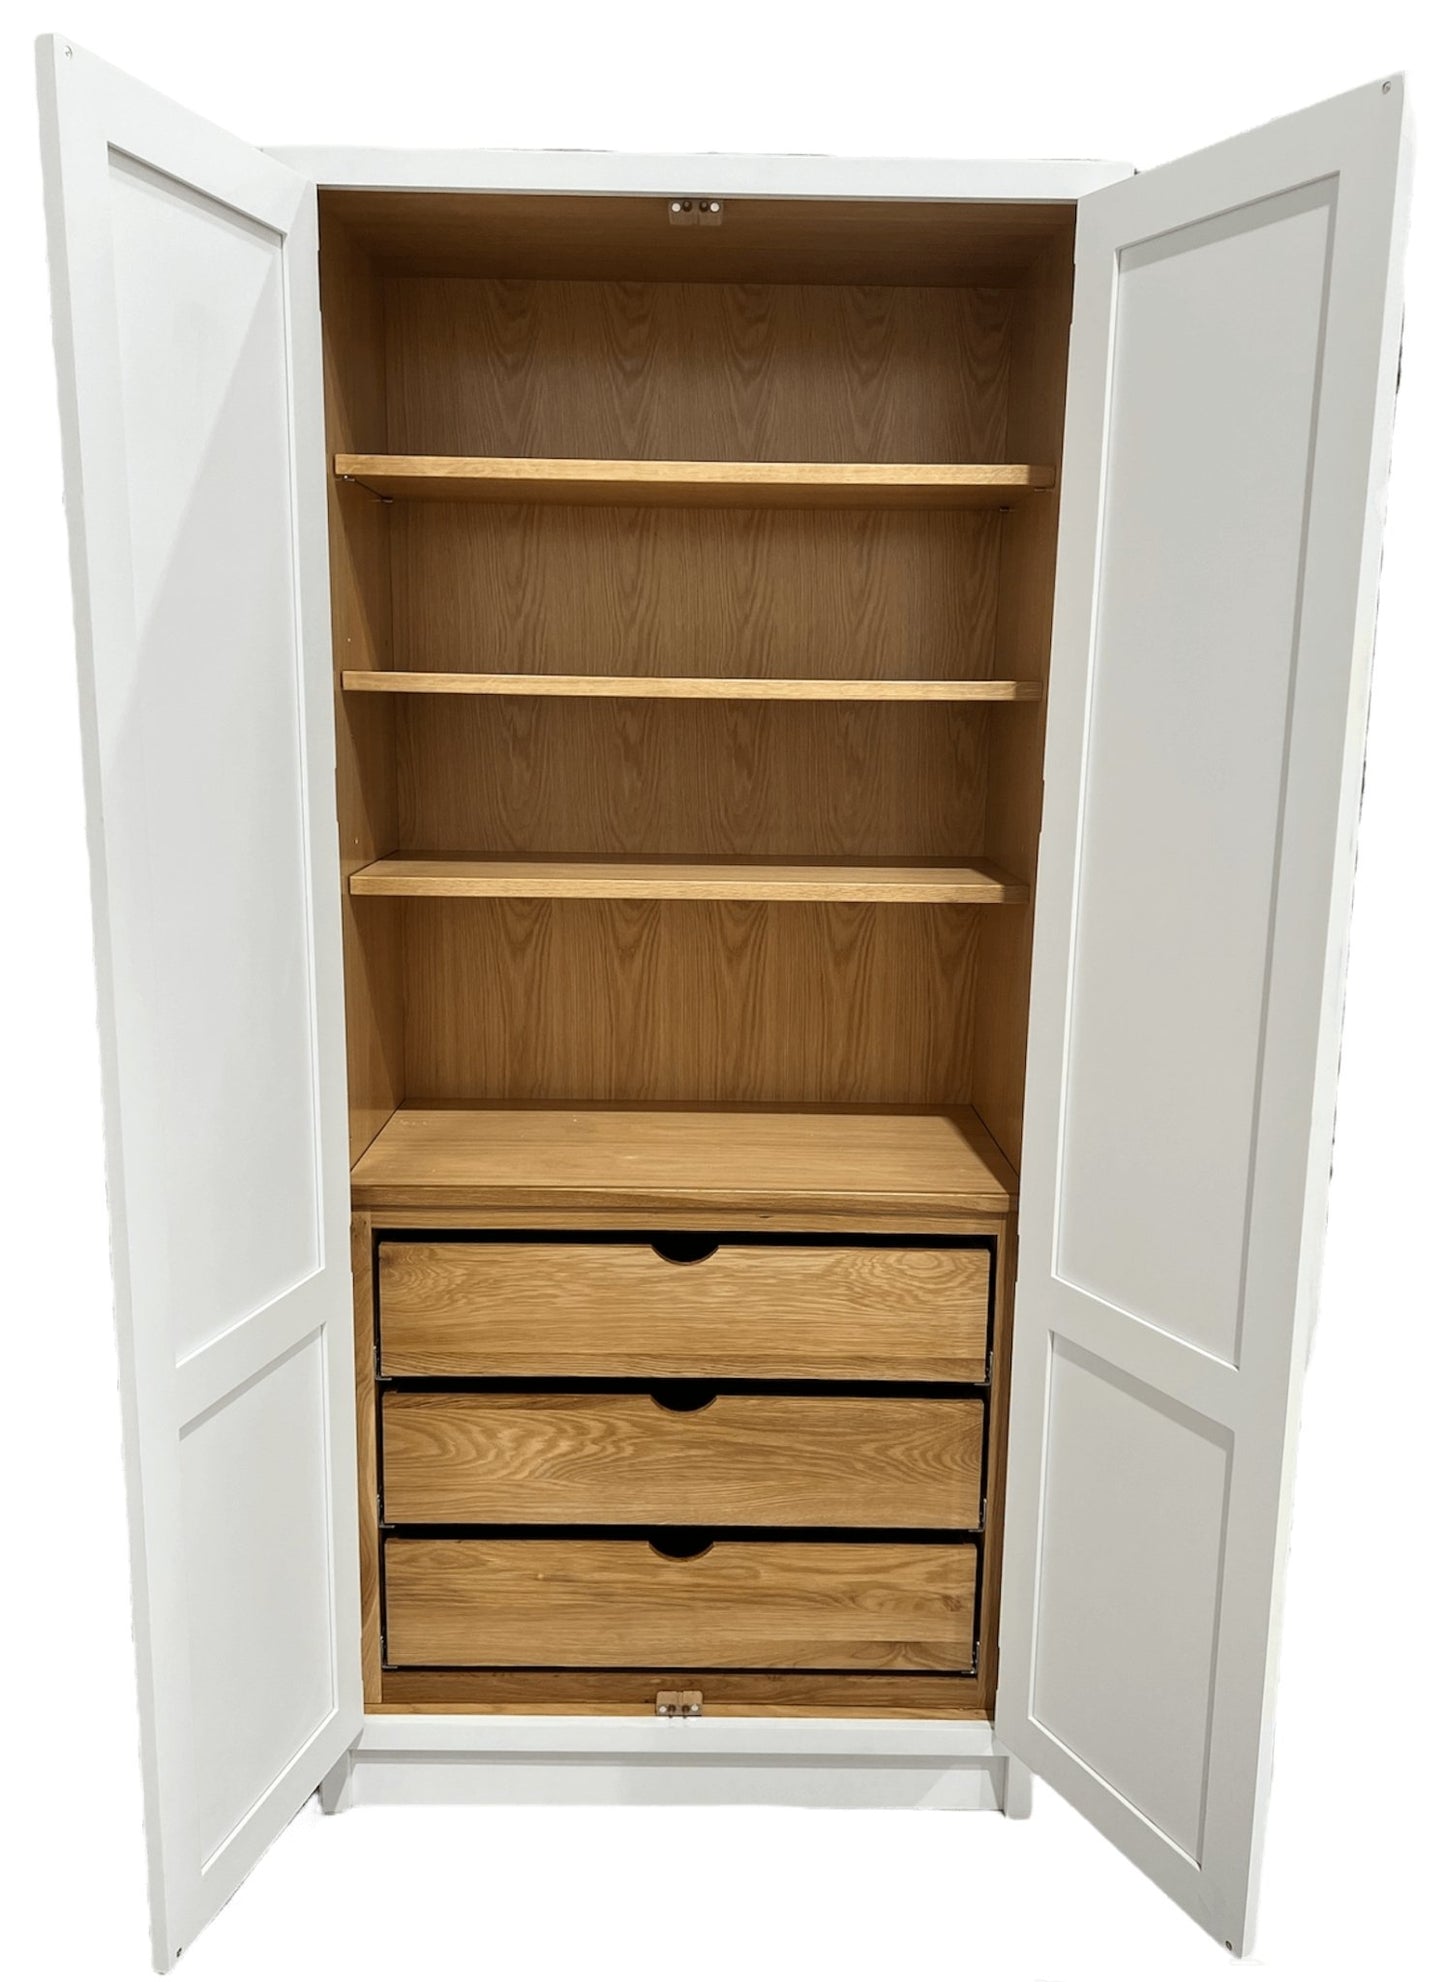 LI 1000 - Set of 3 Internal drawers for a 1000 larder - Classic Kitchens Direct